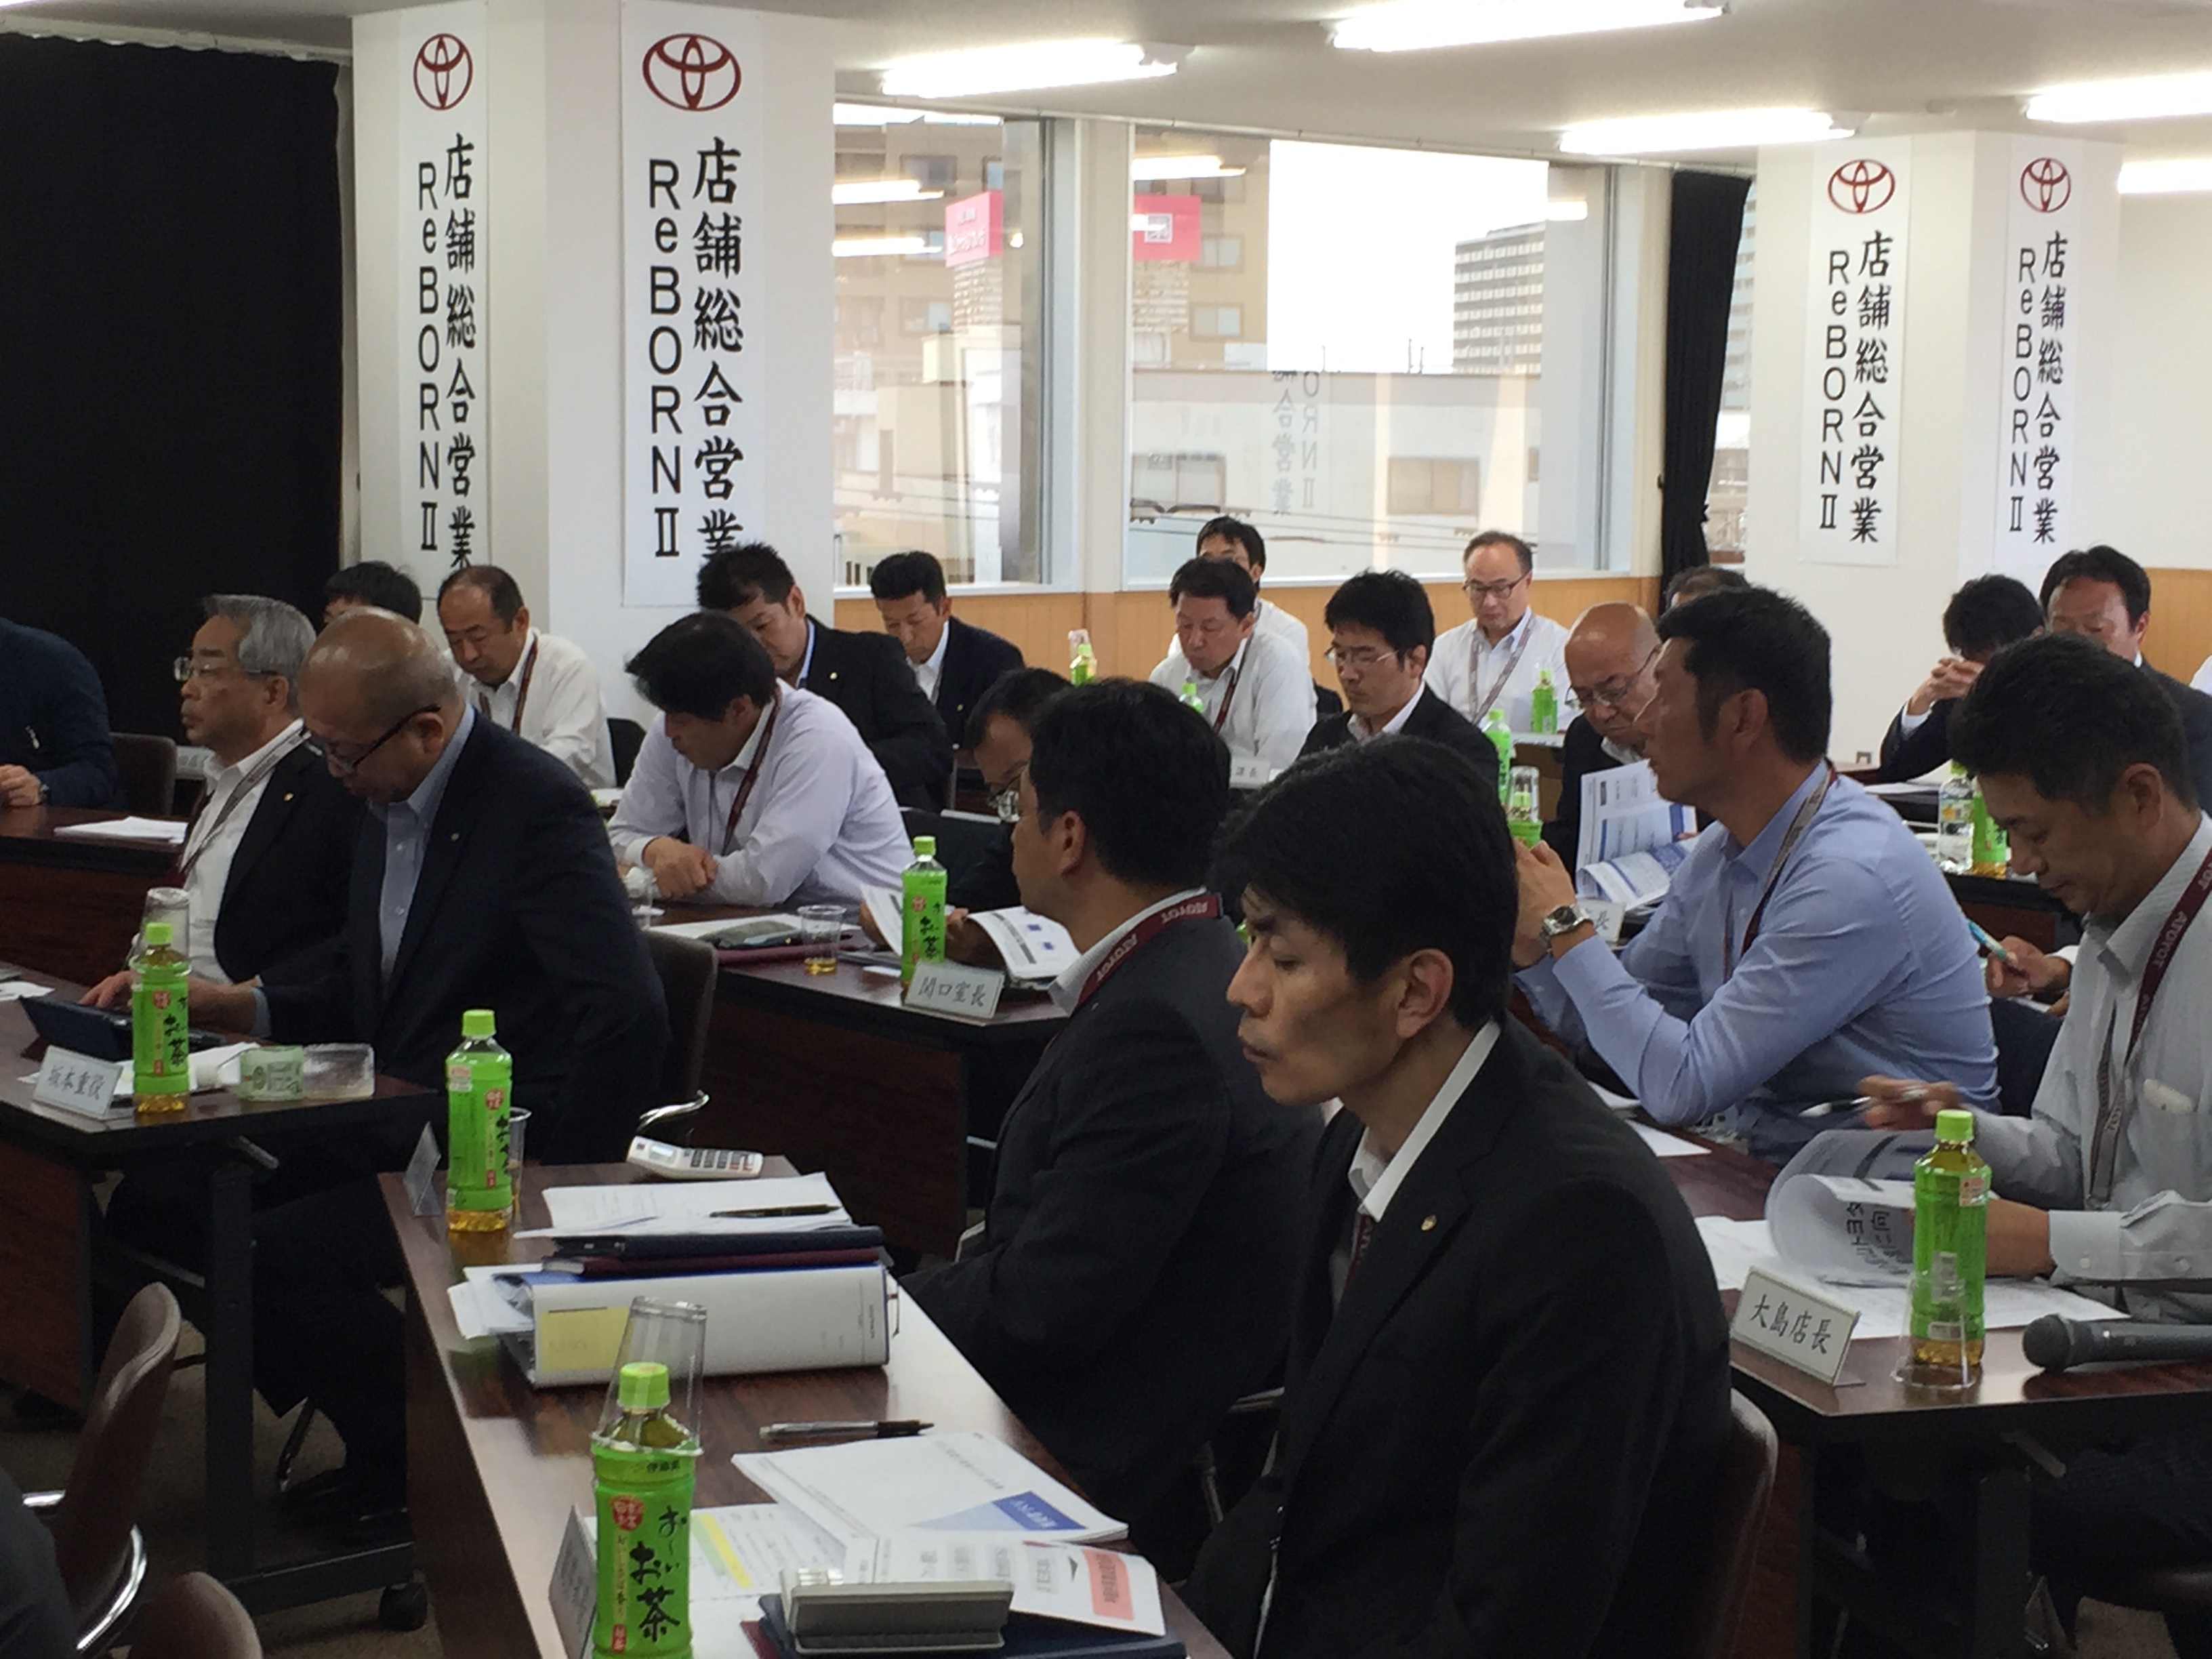 Cs経営構築トライアル キックオフミーティング開催 富山トヨタ社長室ブログ